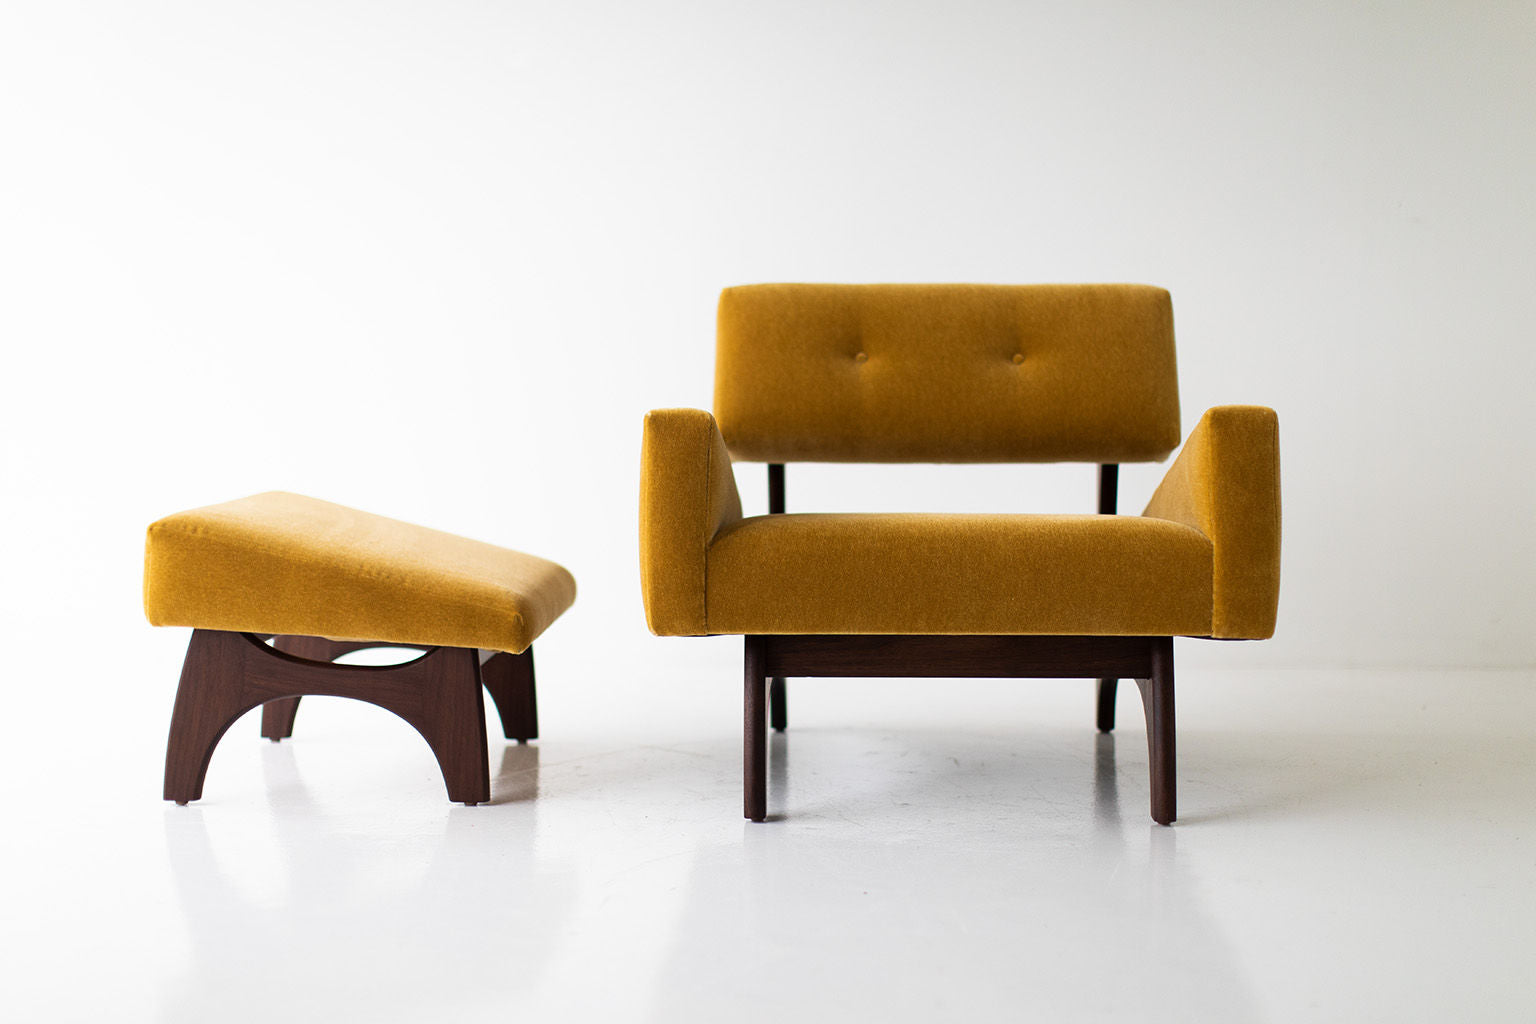 Canadian Modern Upholstered Ottoman - 2315